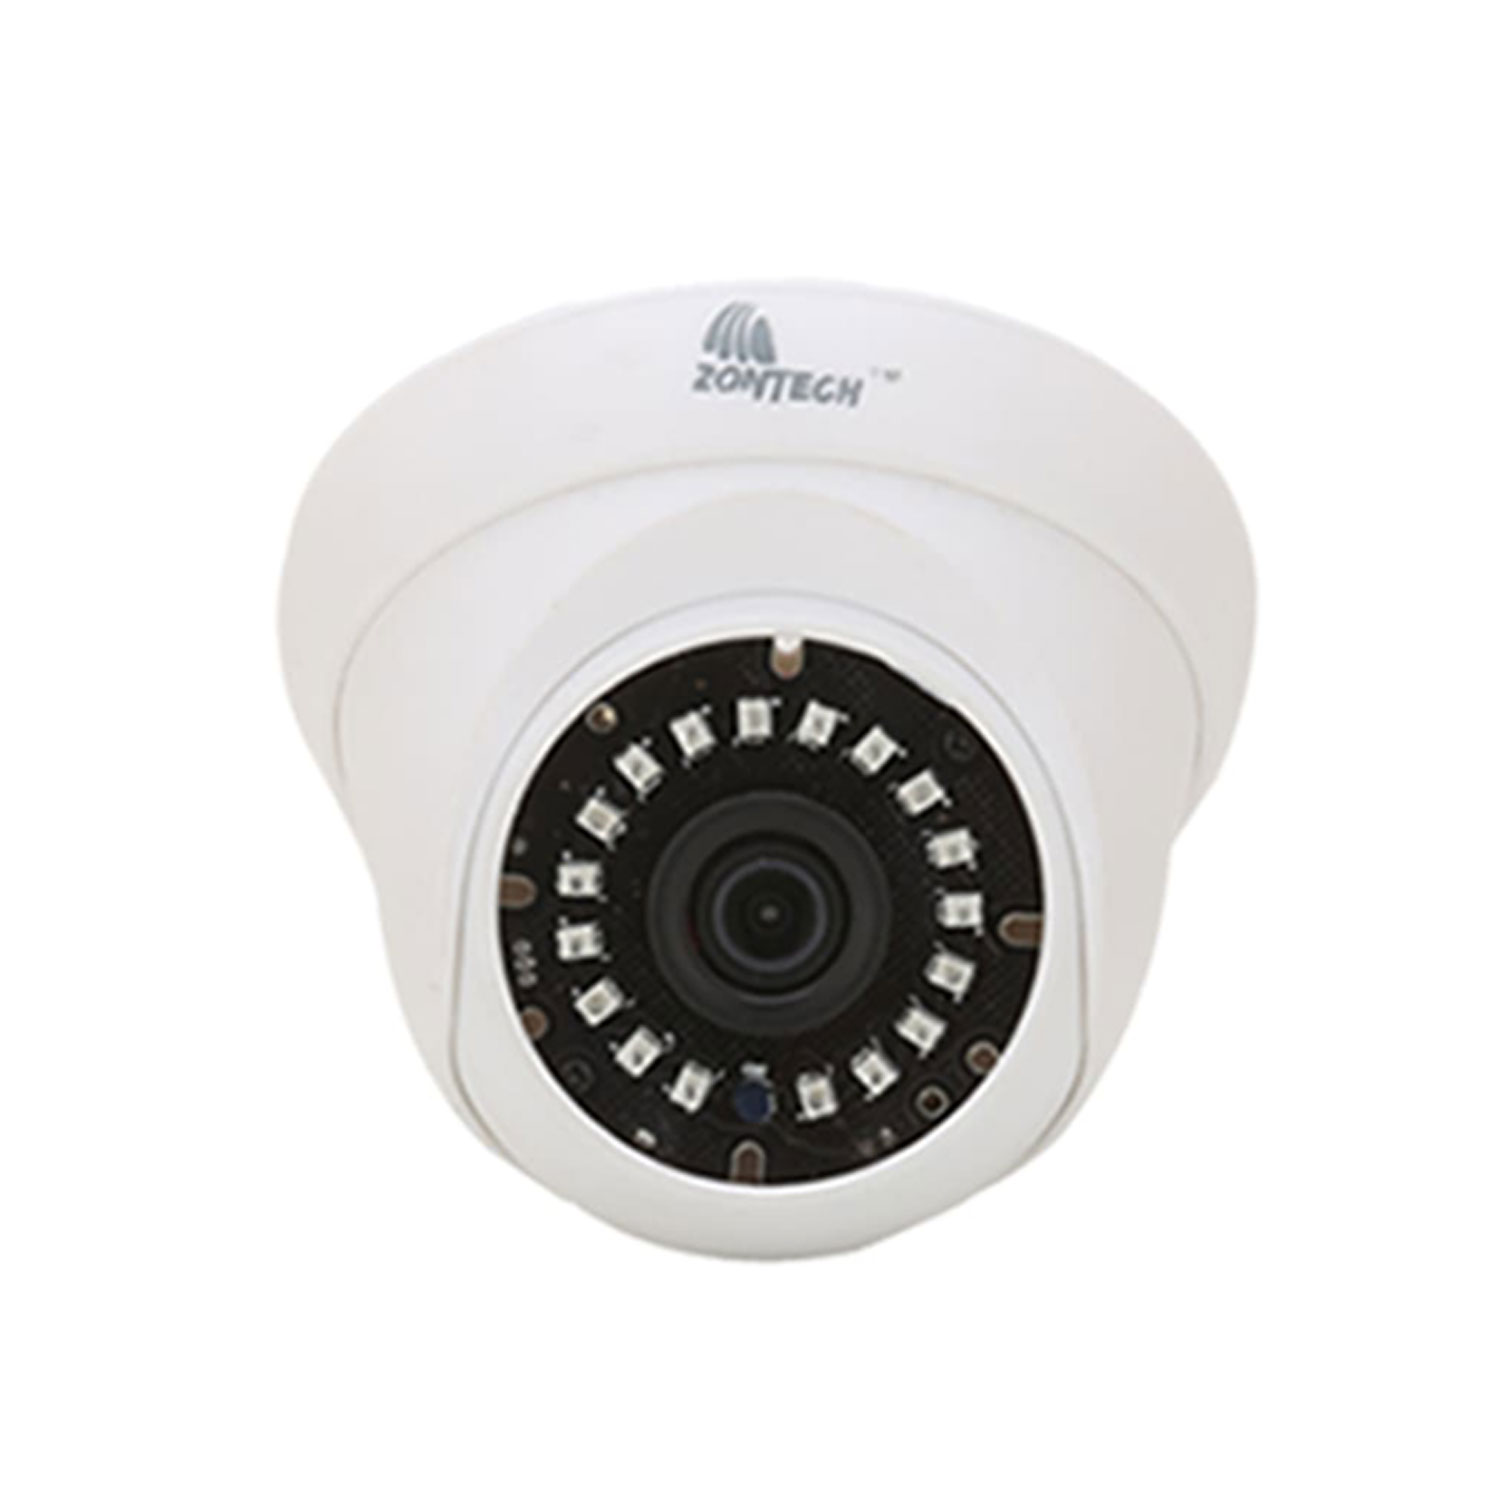 Zontech  AHD Dome Security CCTV Camera 2.4 Megapixel